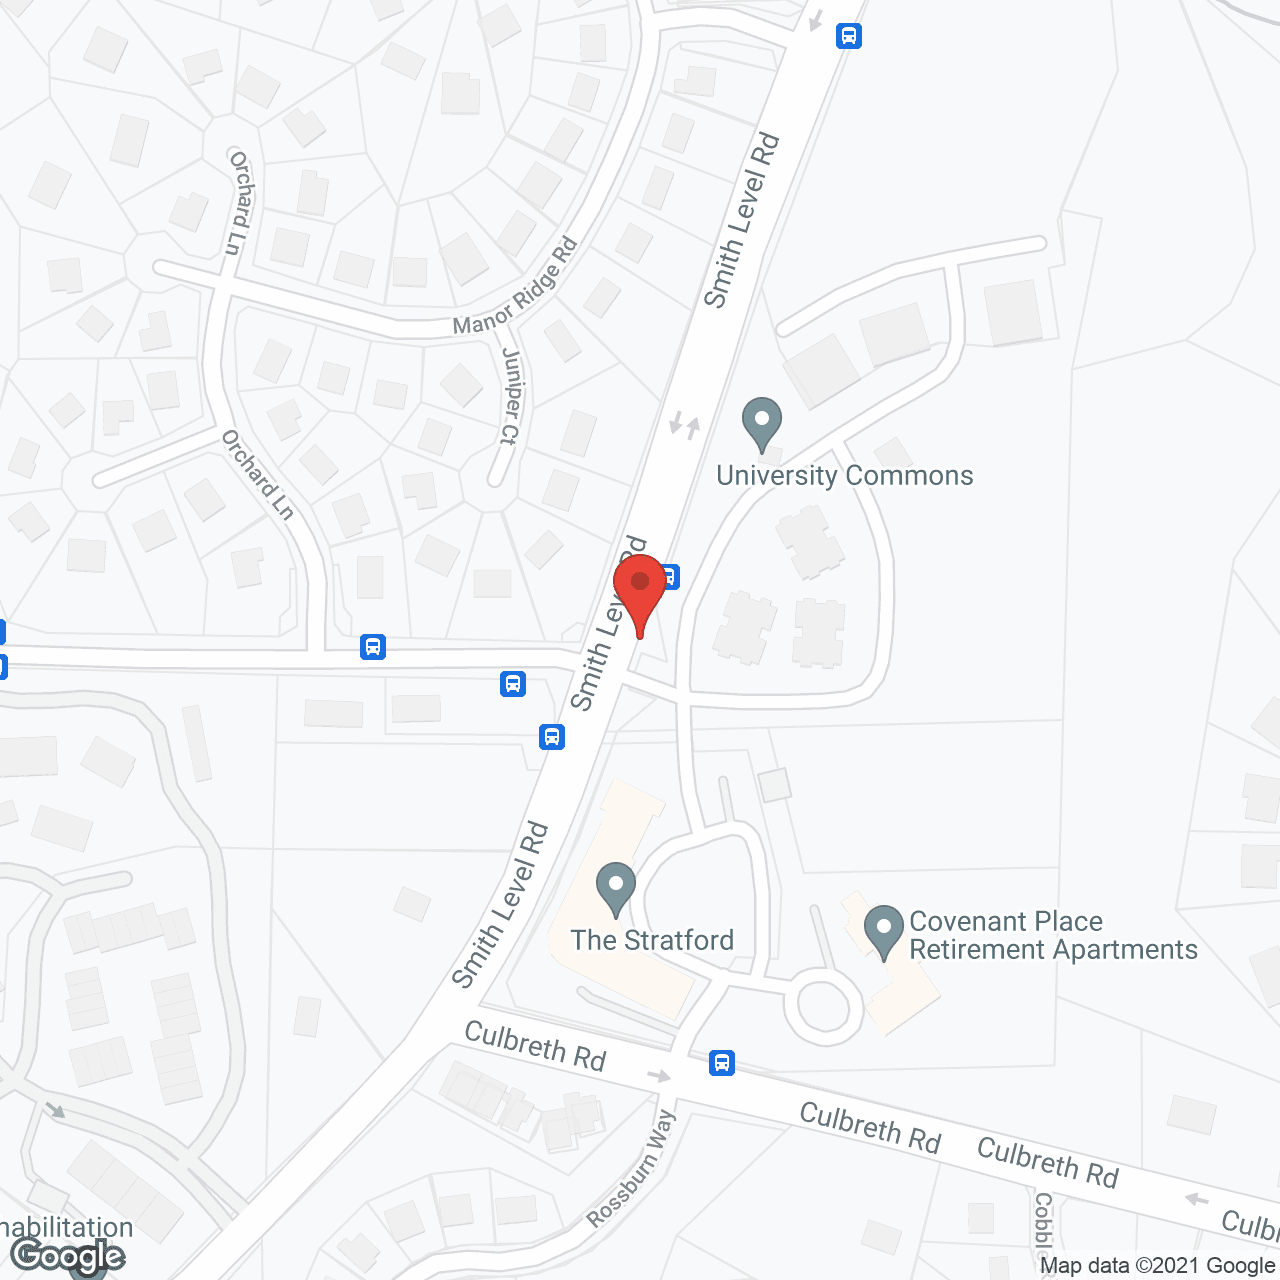 The Stratford in google map